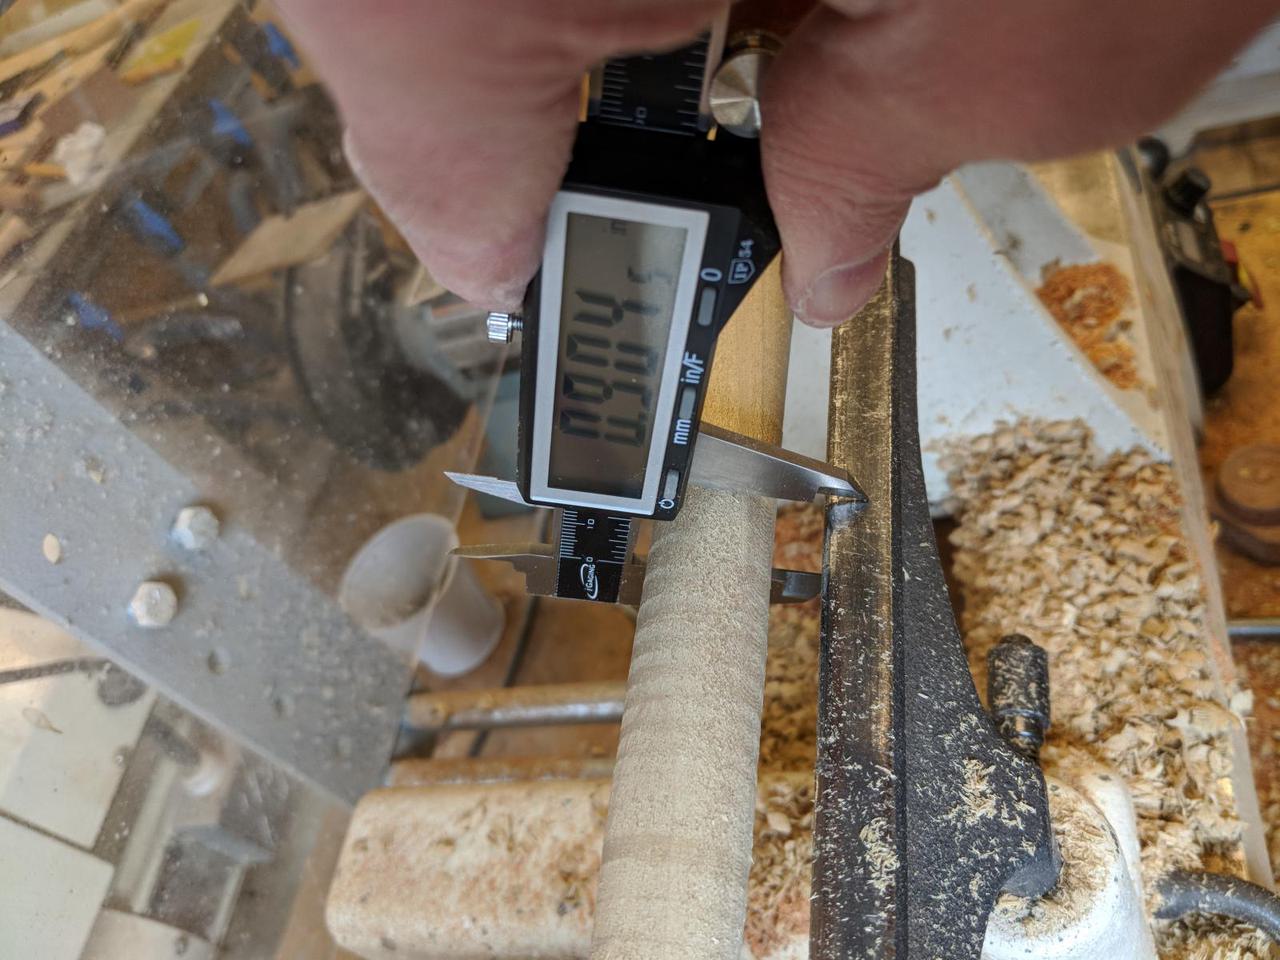 digital calipers measuring width of cylinder.